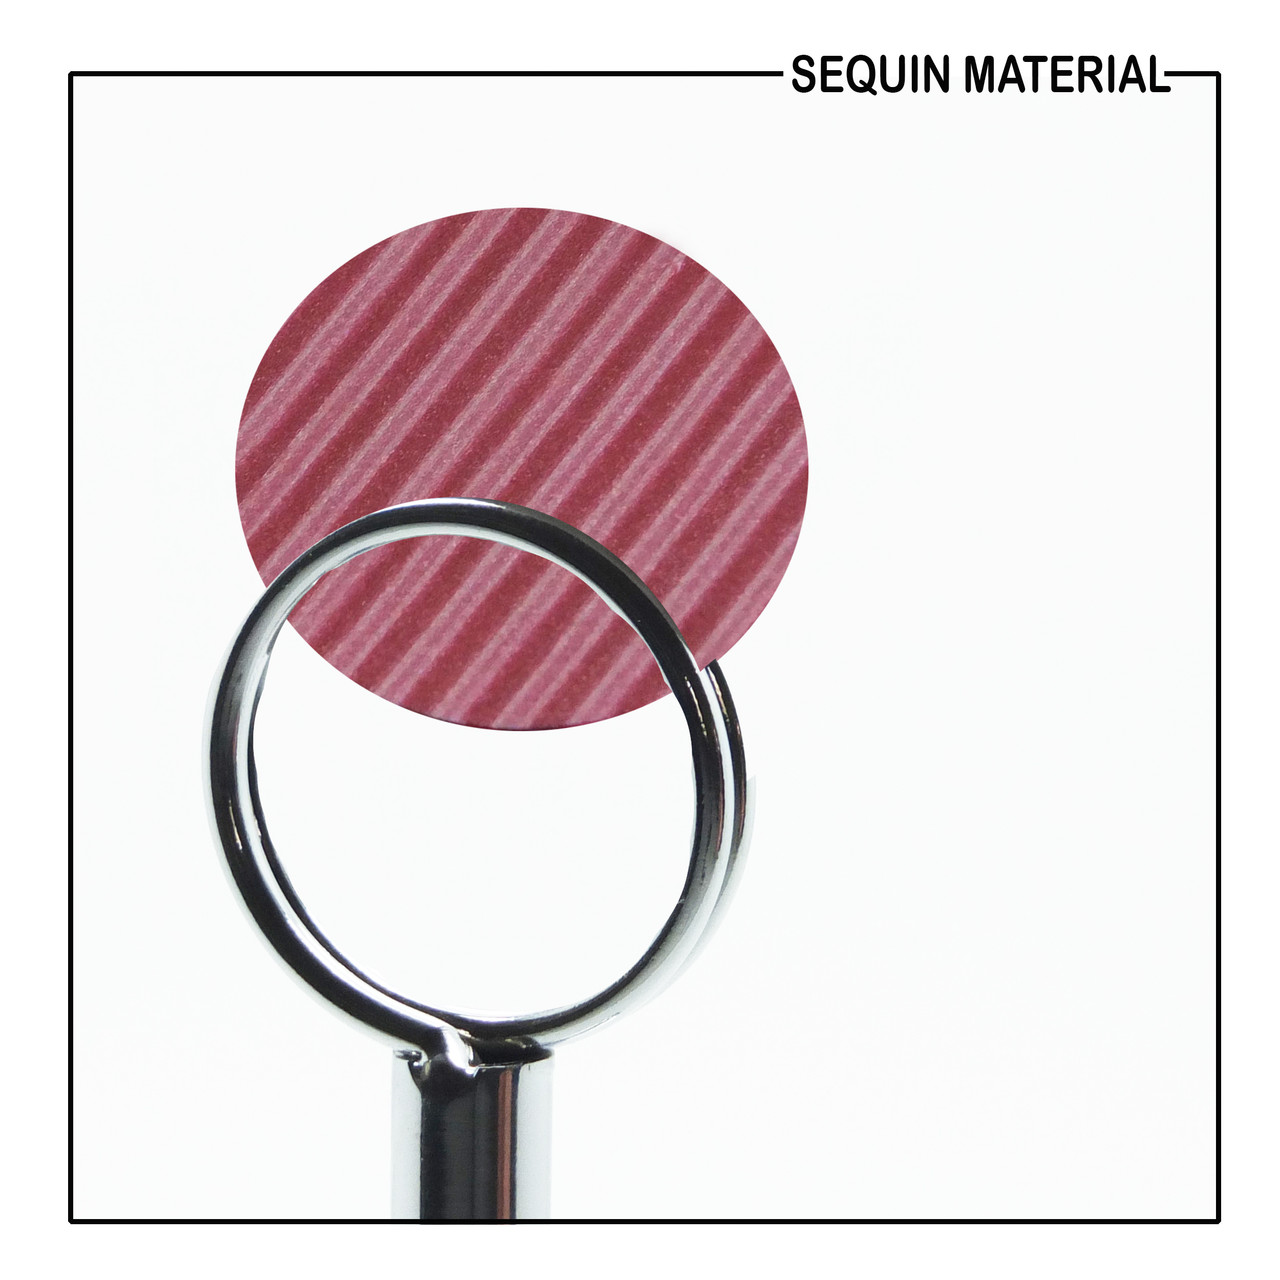 SequinsUSA Red Pink Corrugated Stripe Silver Metallic Print Sequin Material Film RL146